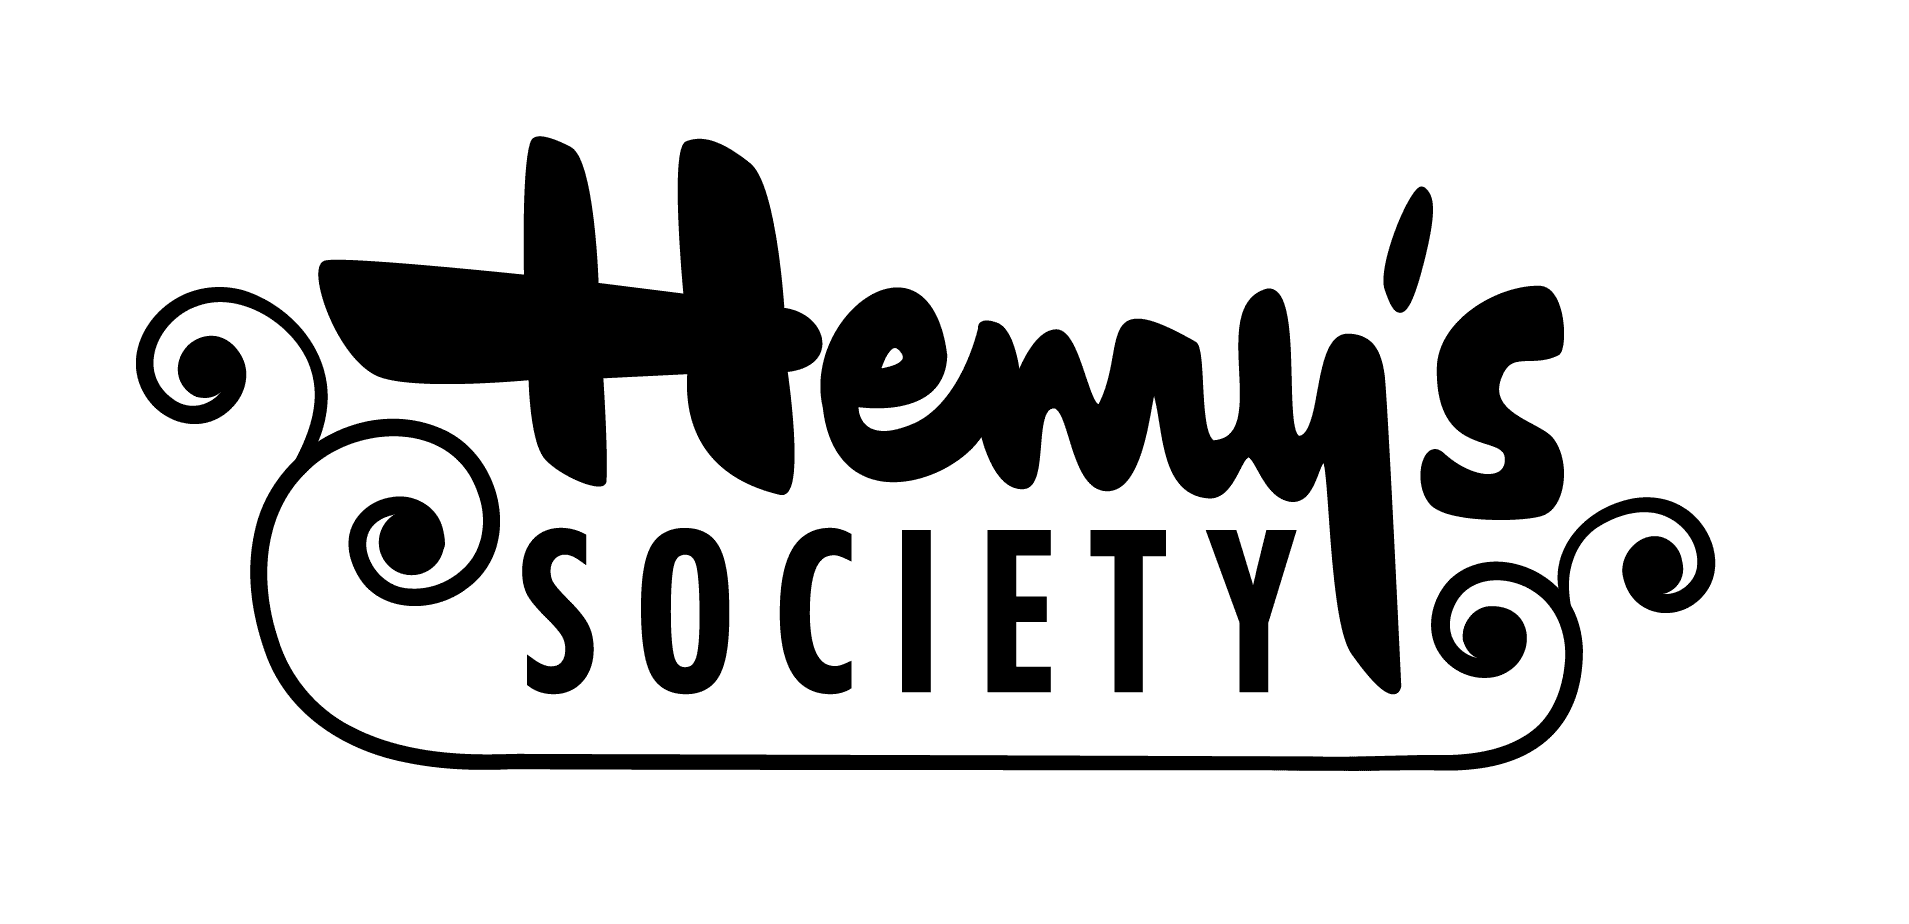 The Henry's Society